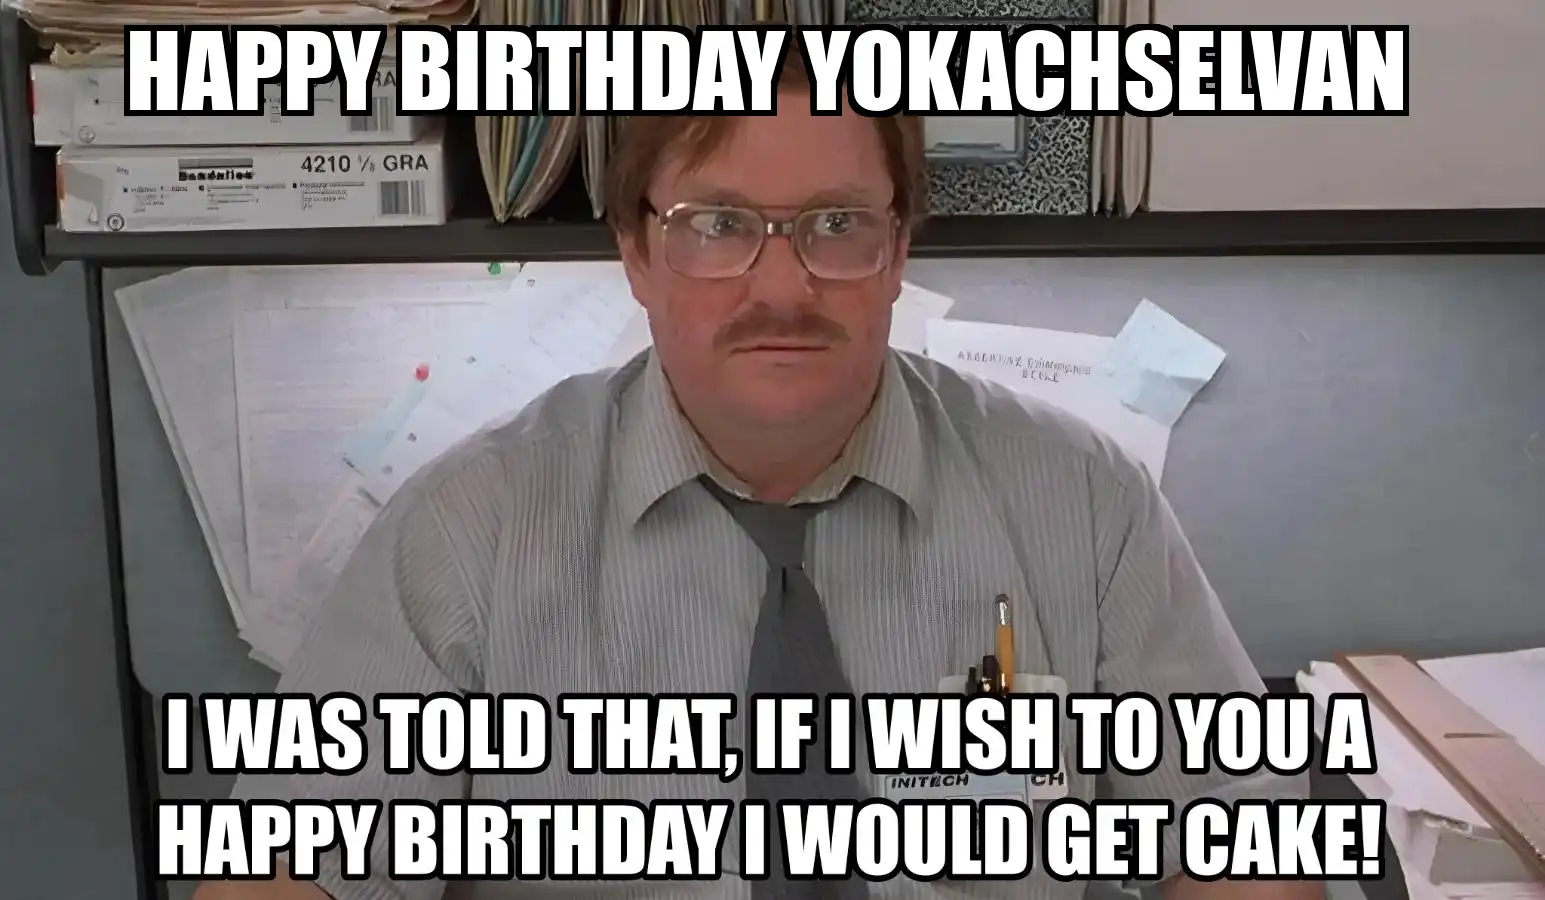 Happy Birthday Yokachselvan I Would Get A Cake Meme